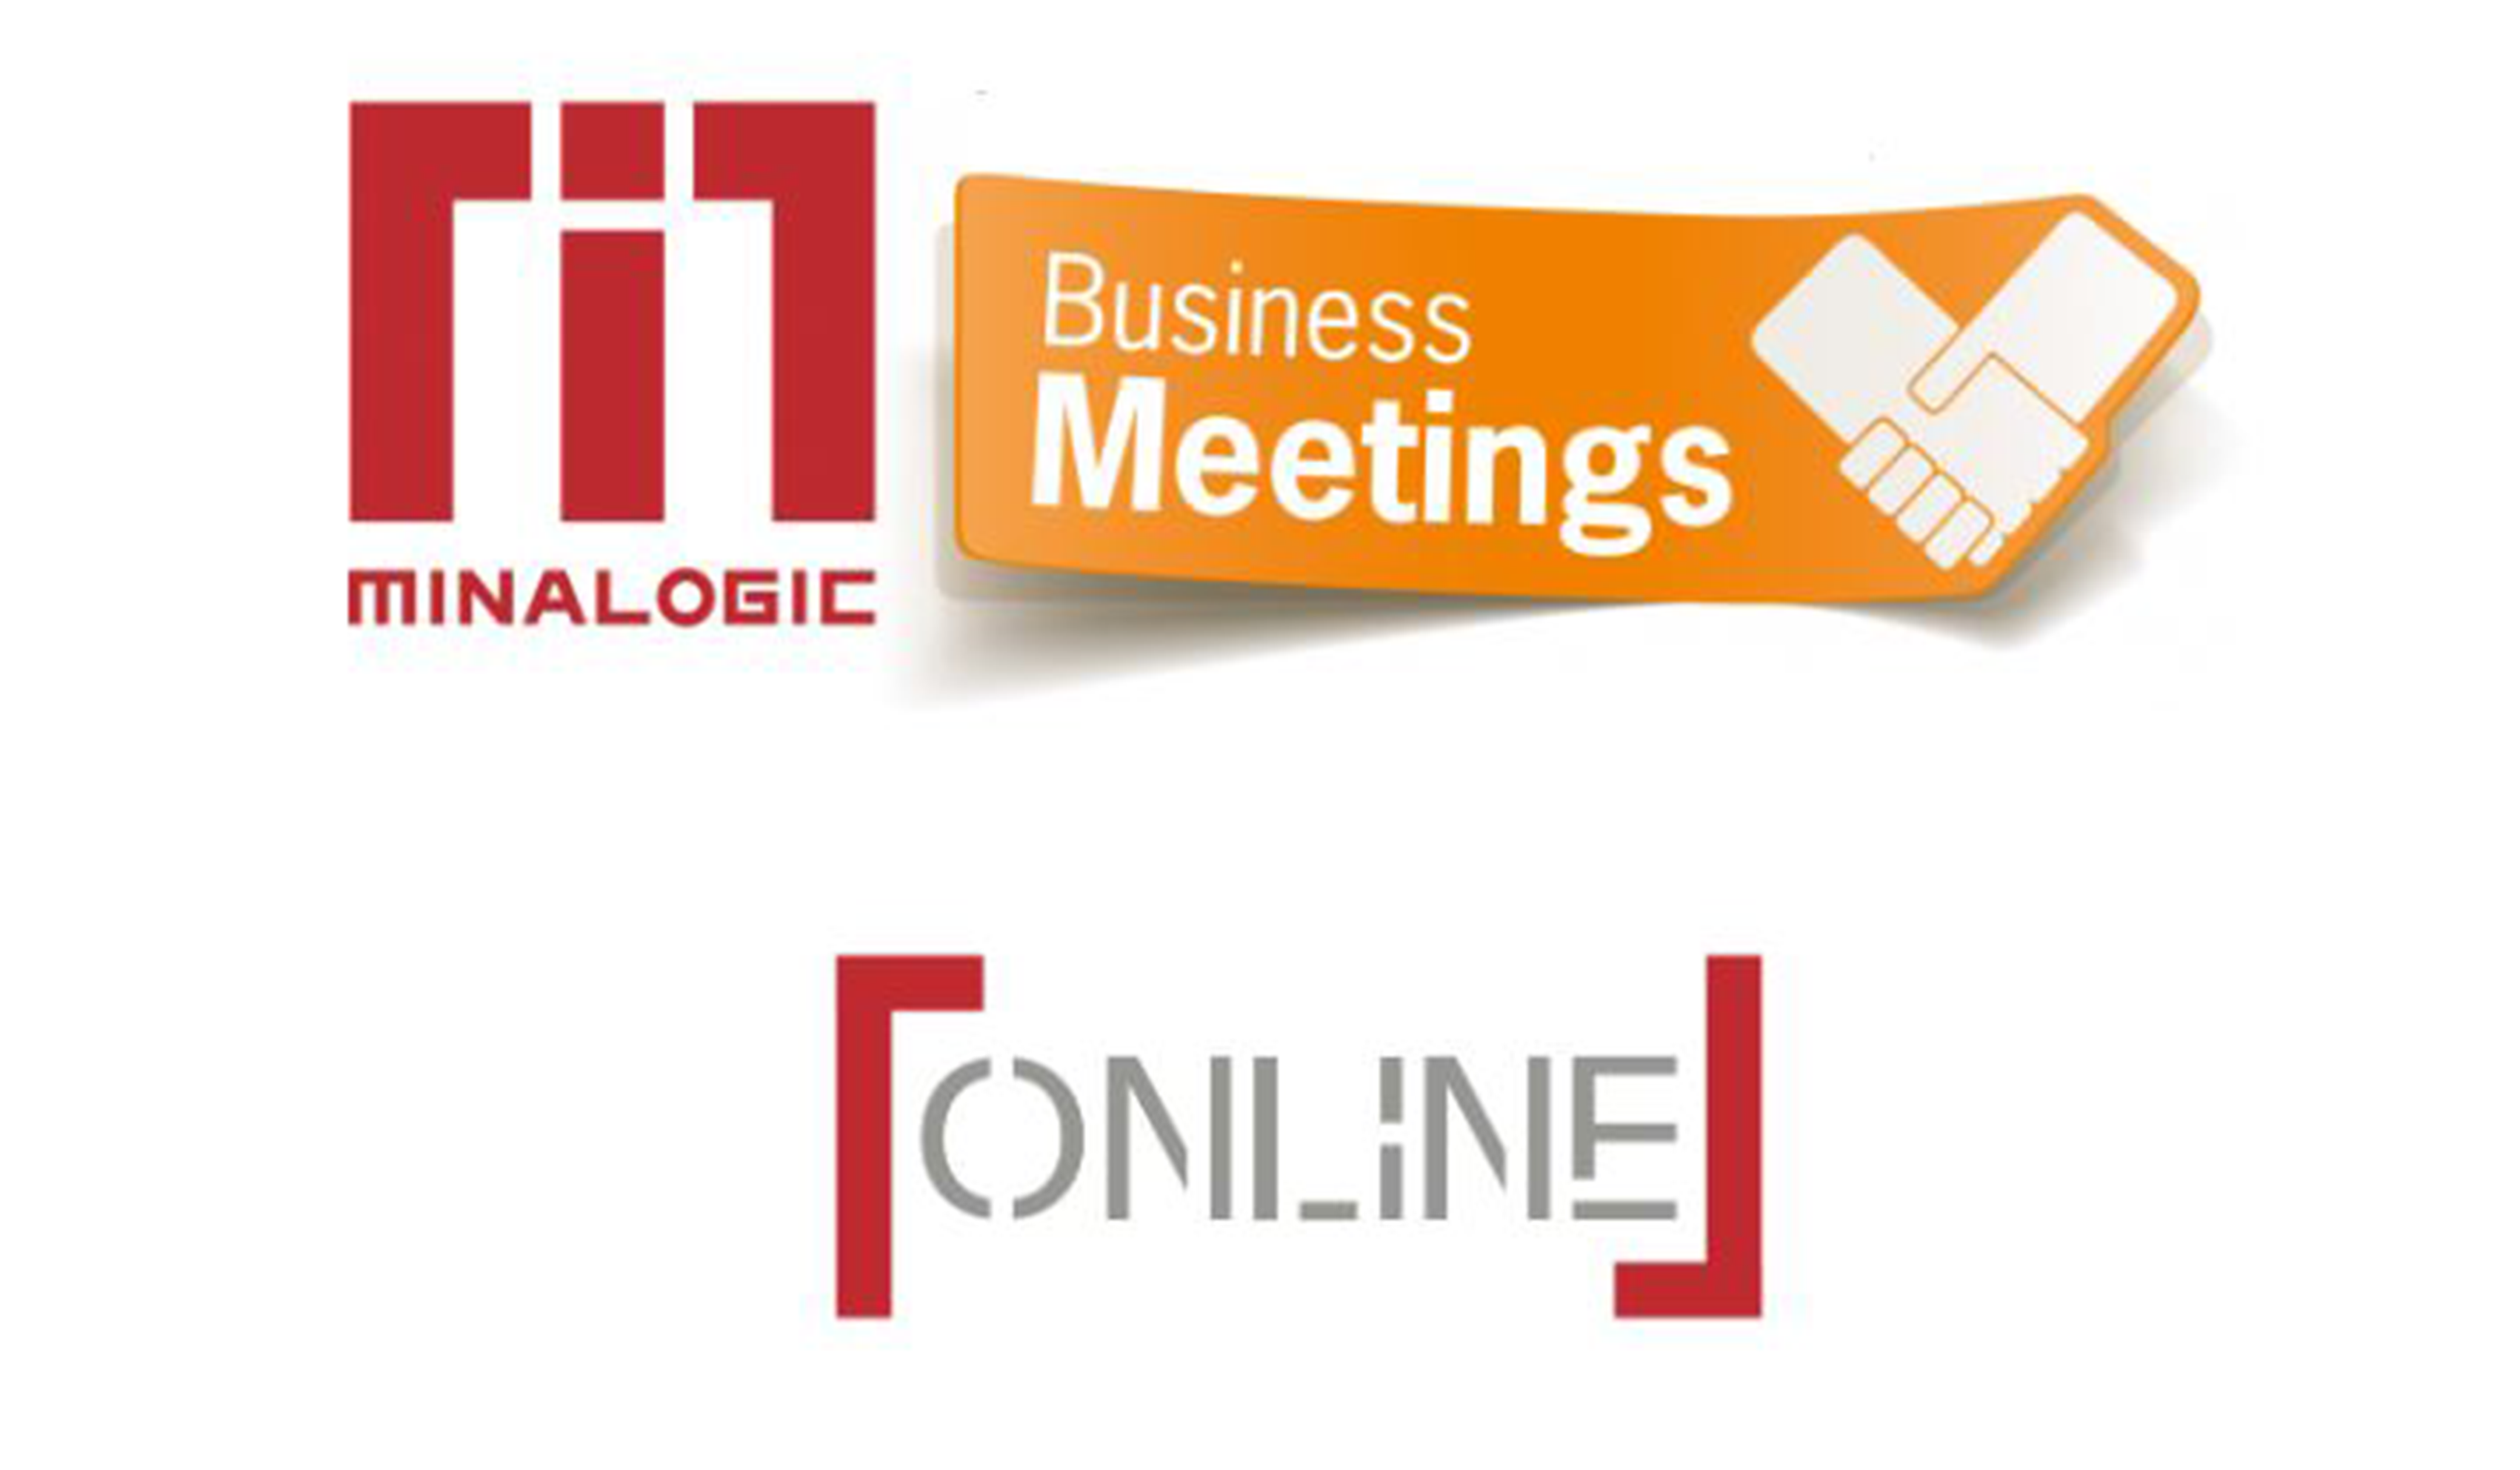 Minalogic Business Meetings 2020 - 100 % on line